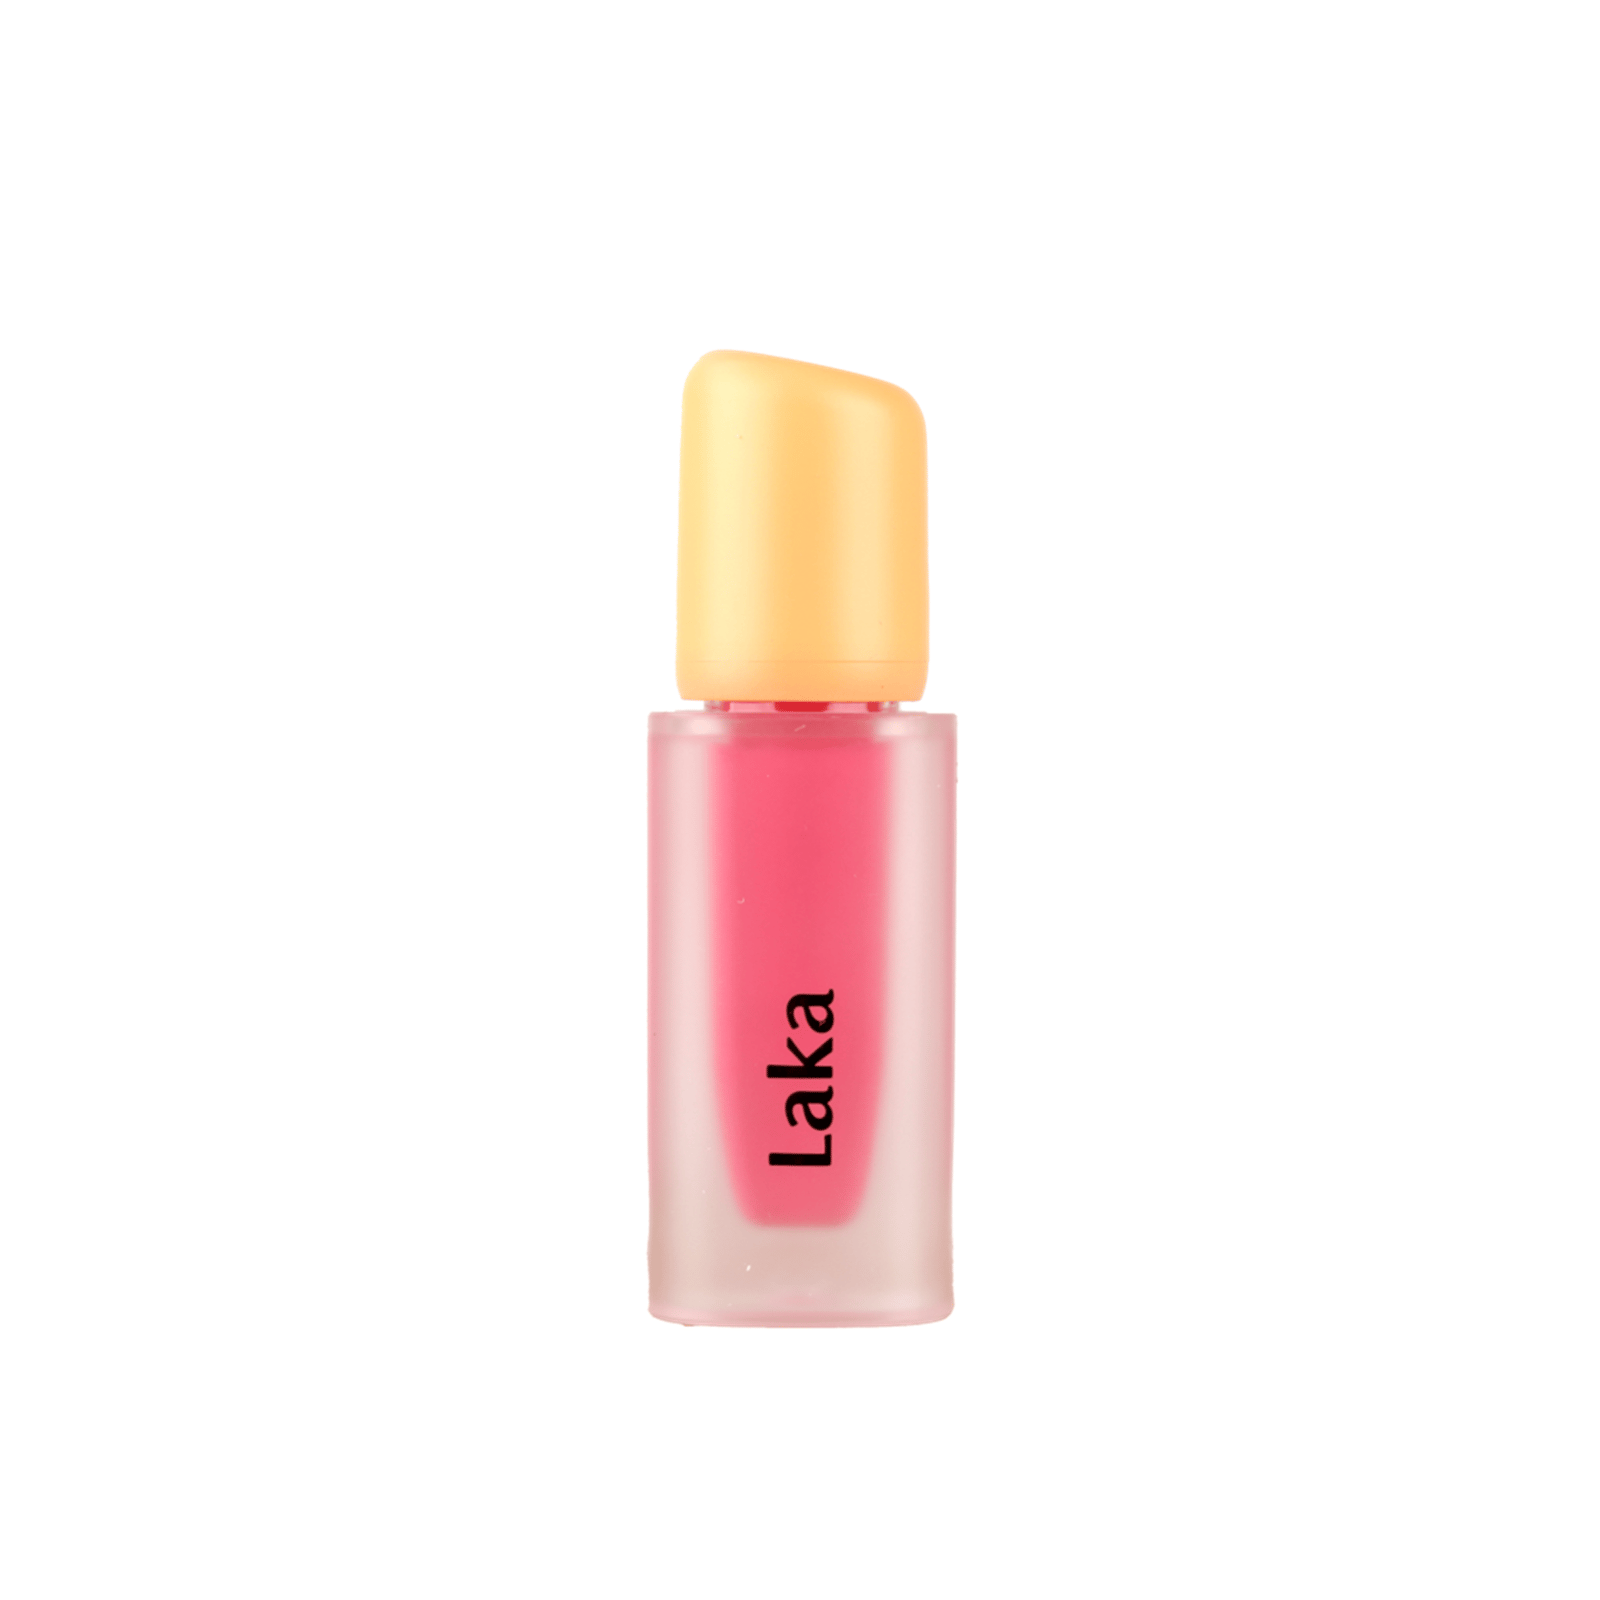 Laka Fruity Glam Lip Tint 105 Cold 4.5g